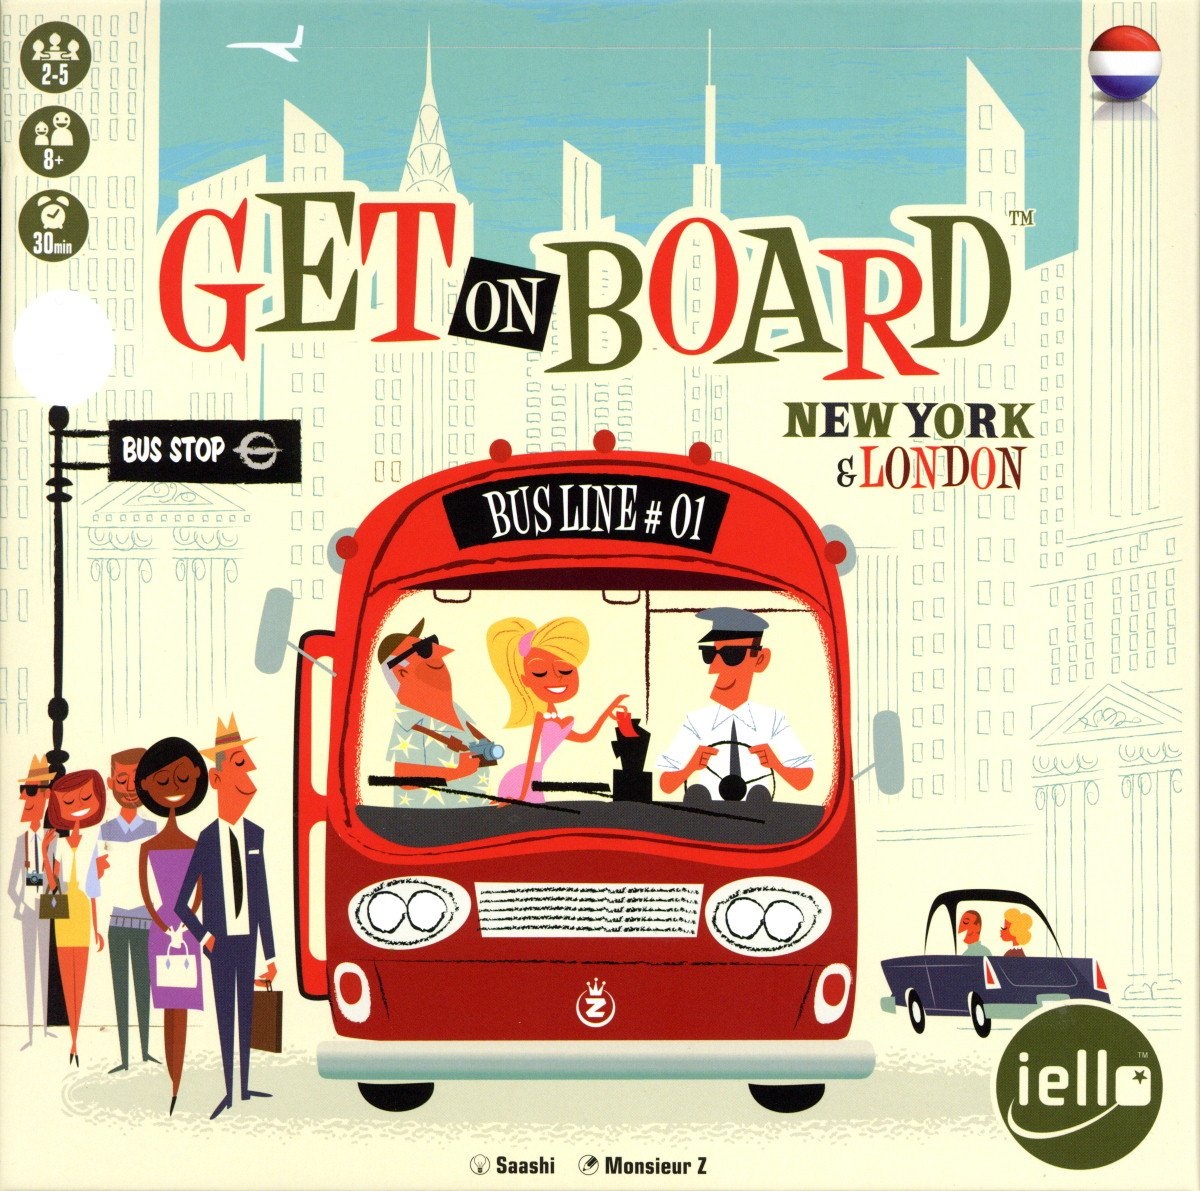 Get on Board: New York & London